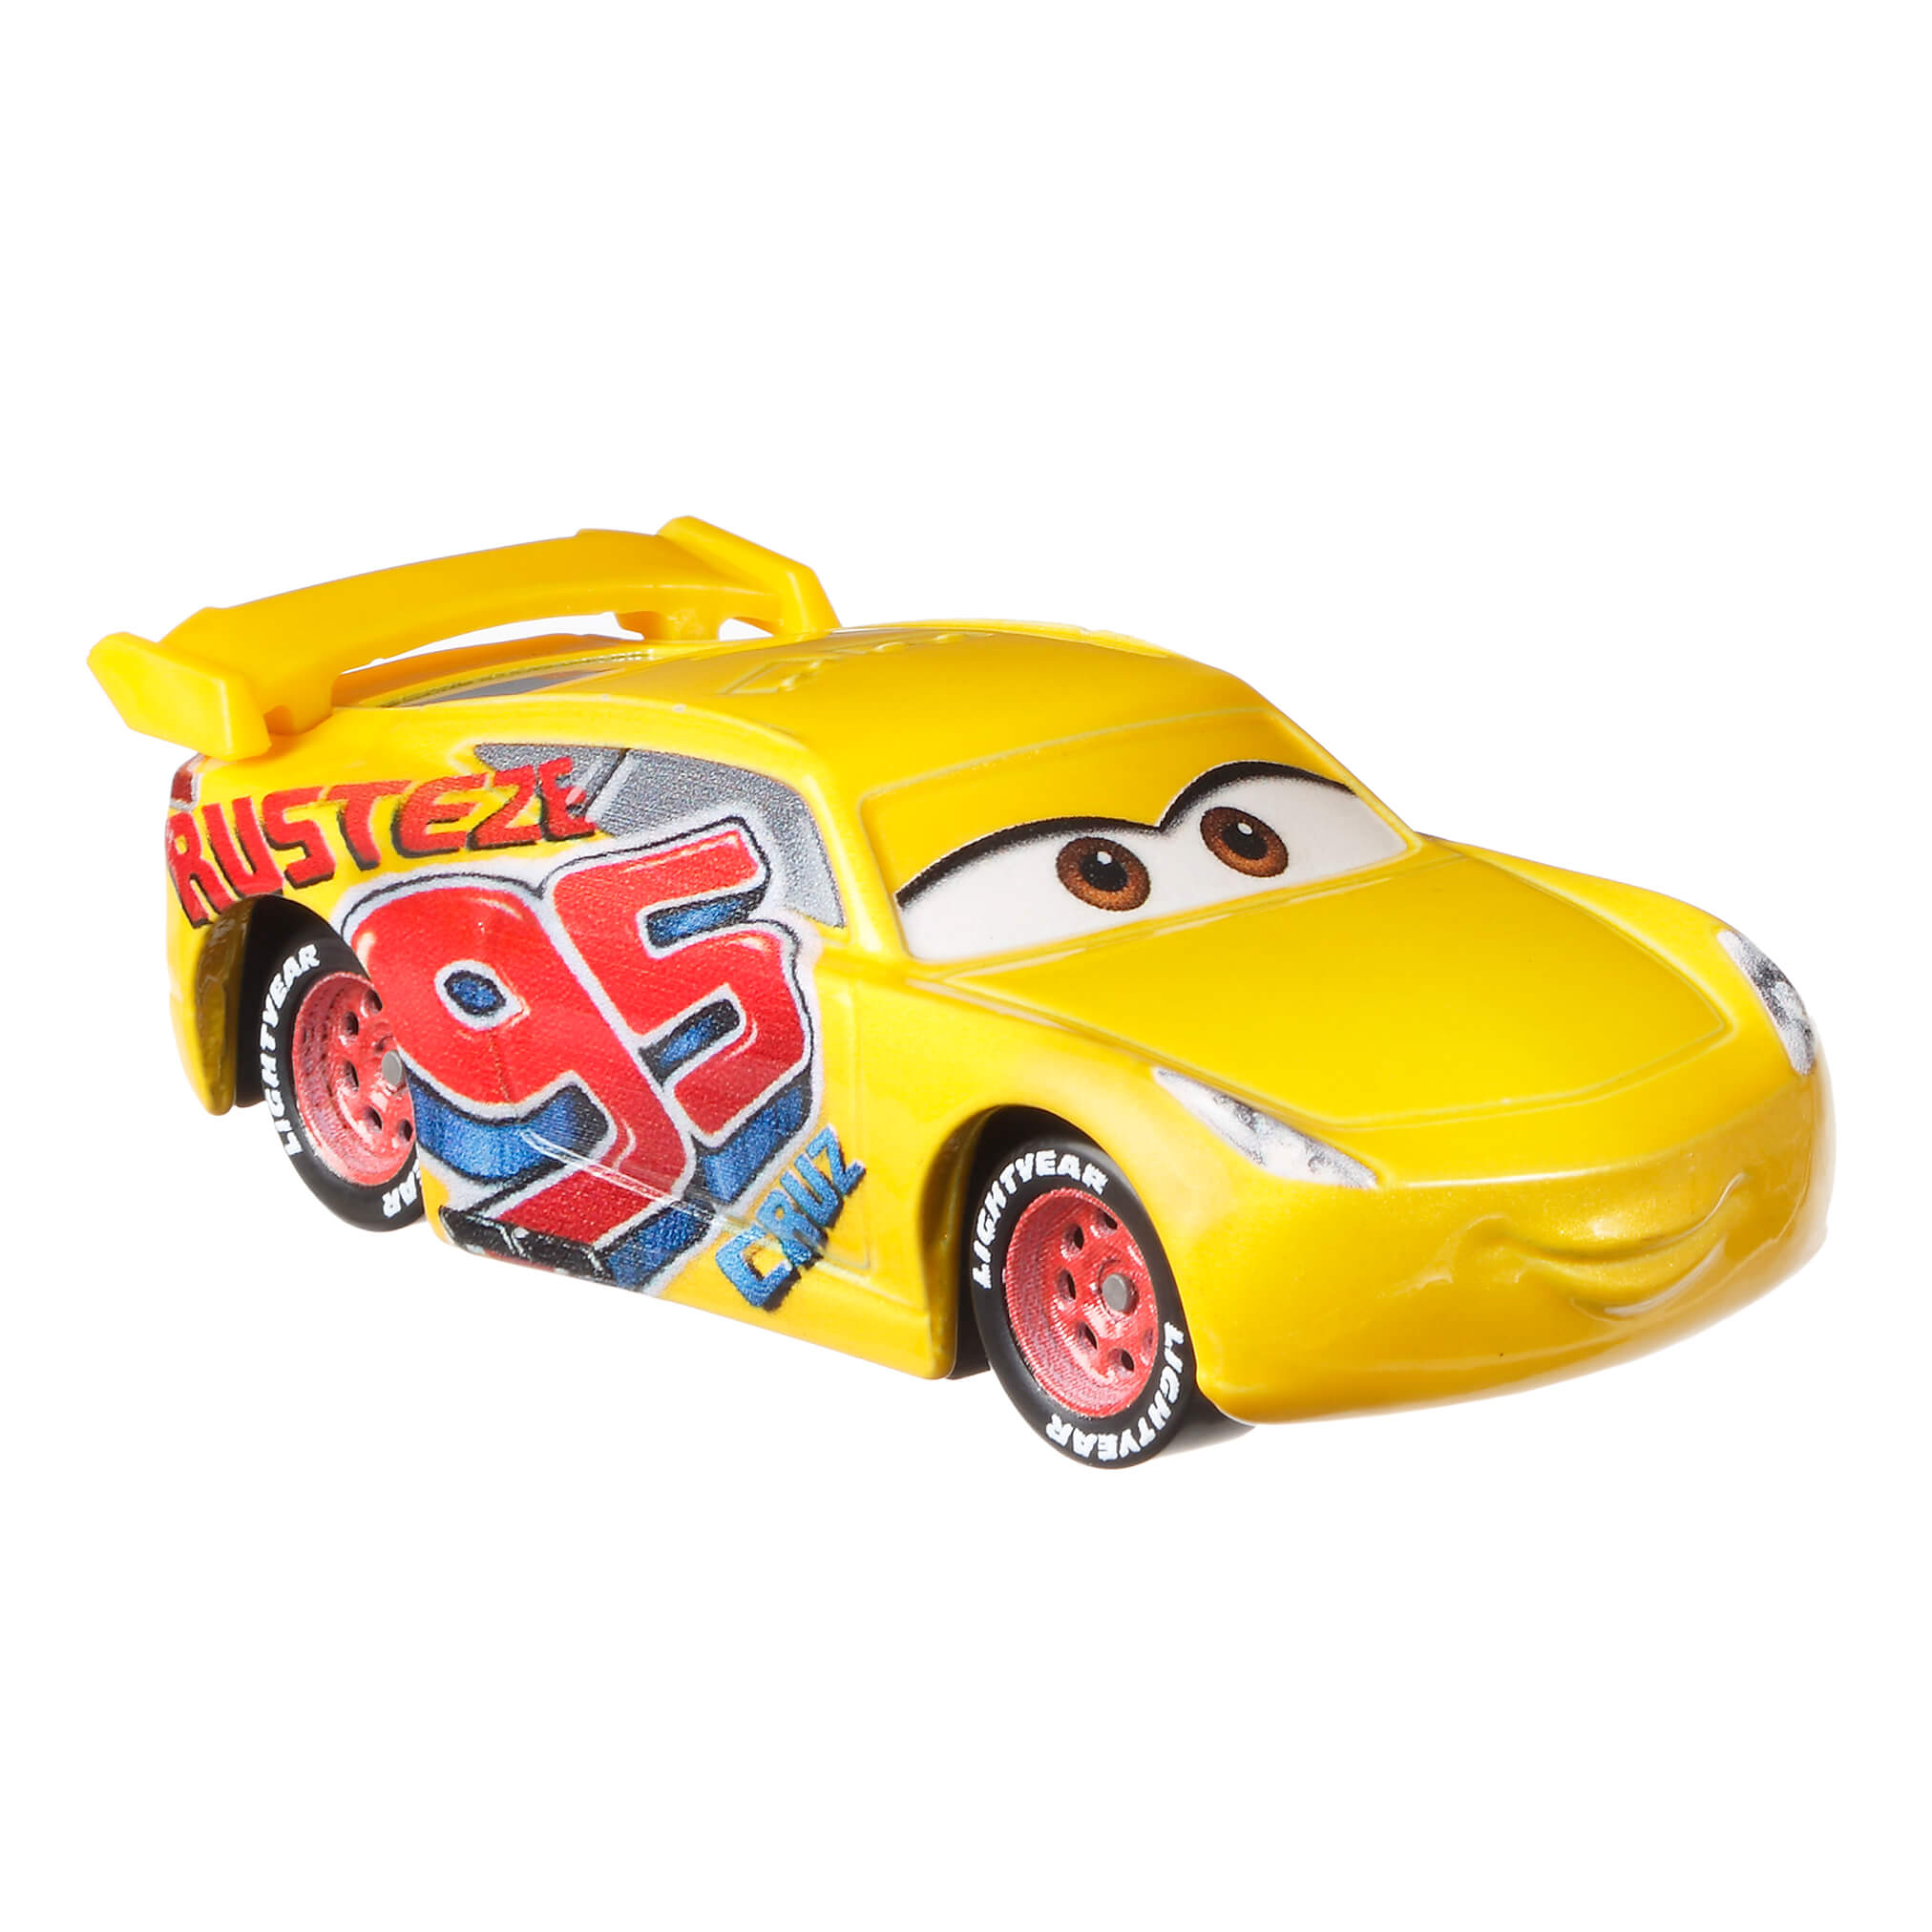 Disney Pixar Cars Rusteze Cruz Ramirez 1:55 Scale Diecast Vehicle